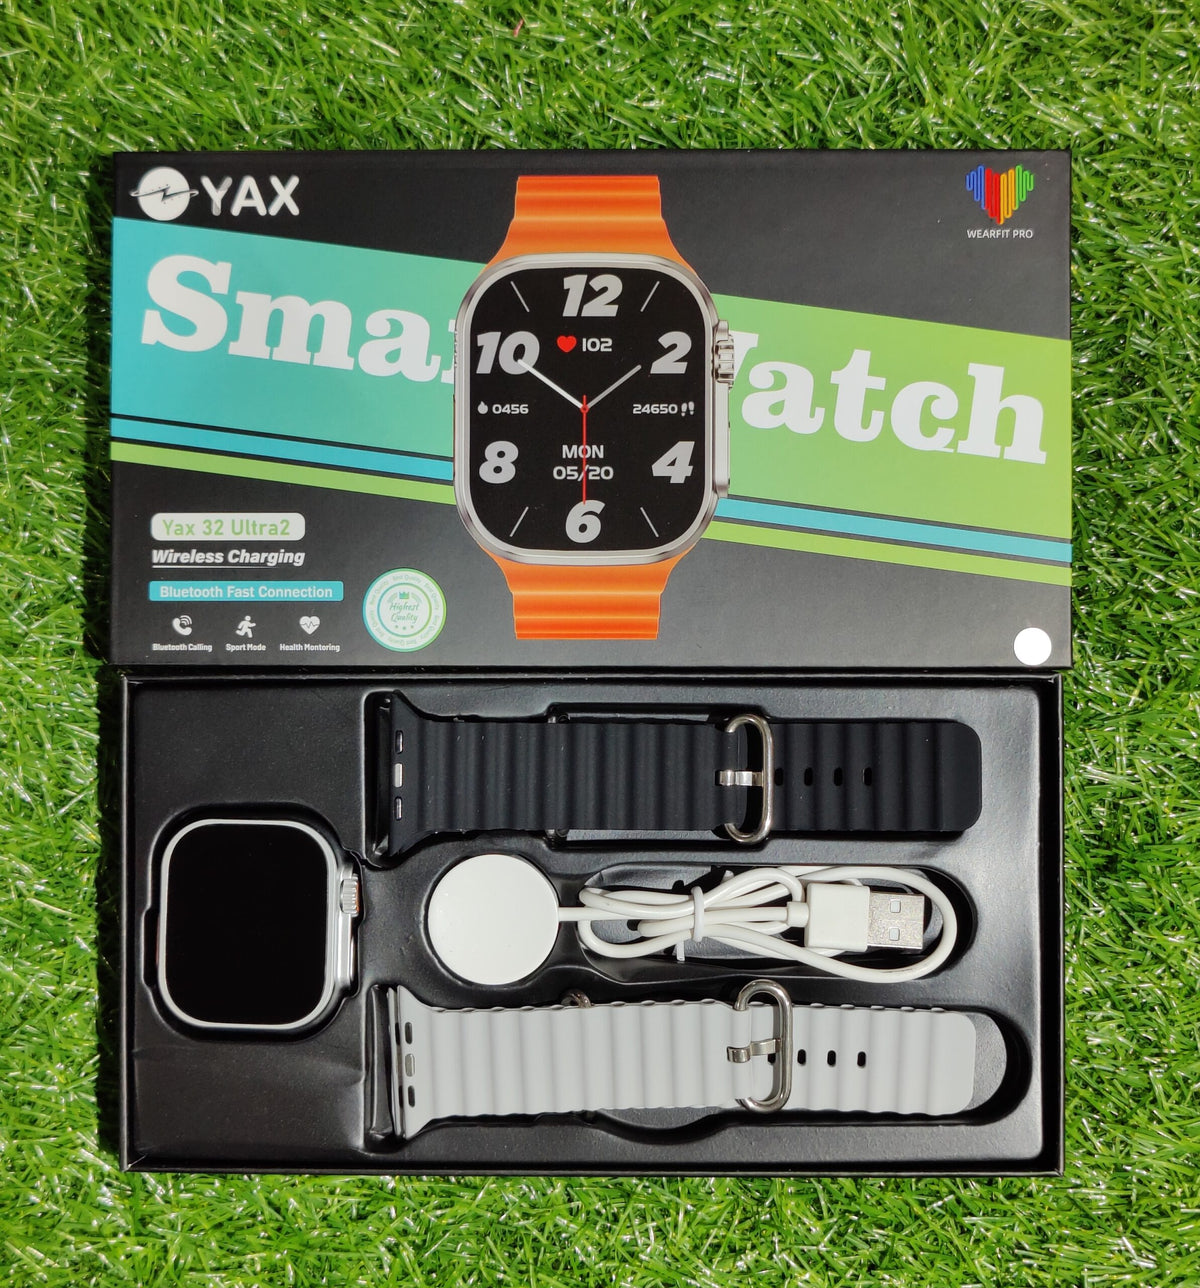 YAX 32 ultra 2 Smart Watch - 2 Straps